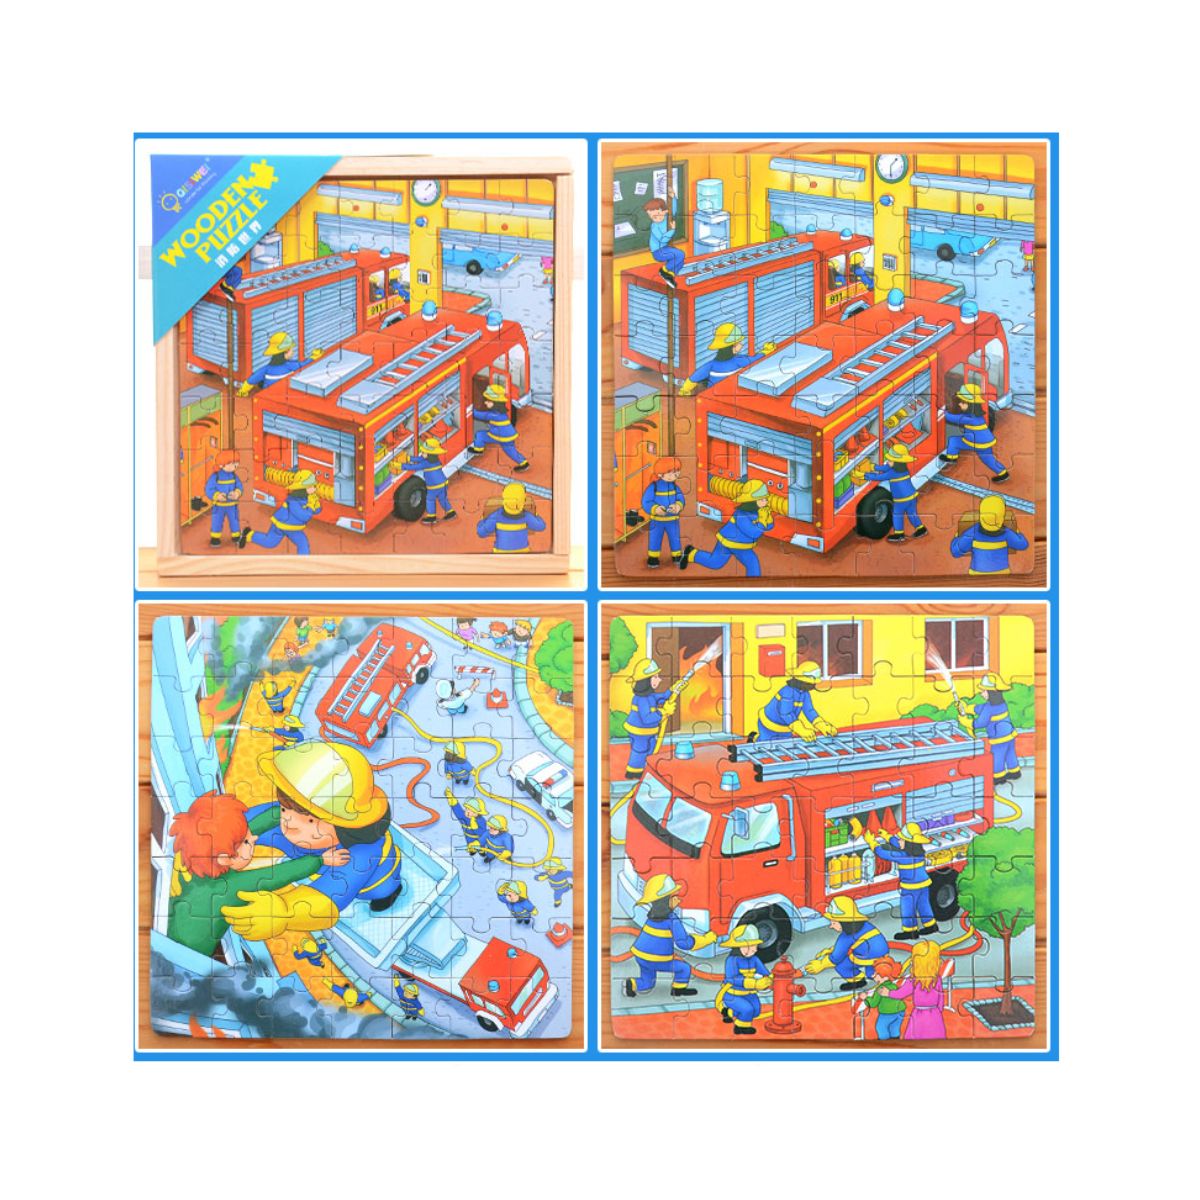 Jucarii interior - Puzzle 3 in 1 din lemn in cutie cu tematica – Pompieri, WD 9002F, hectarul.ro